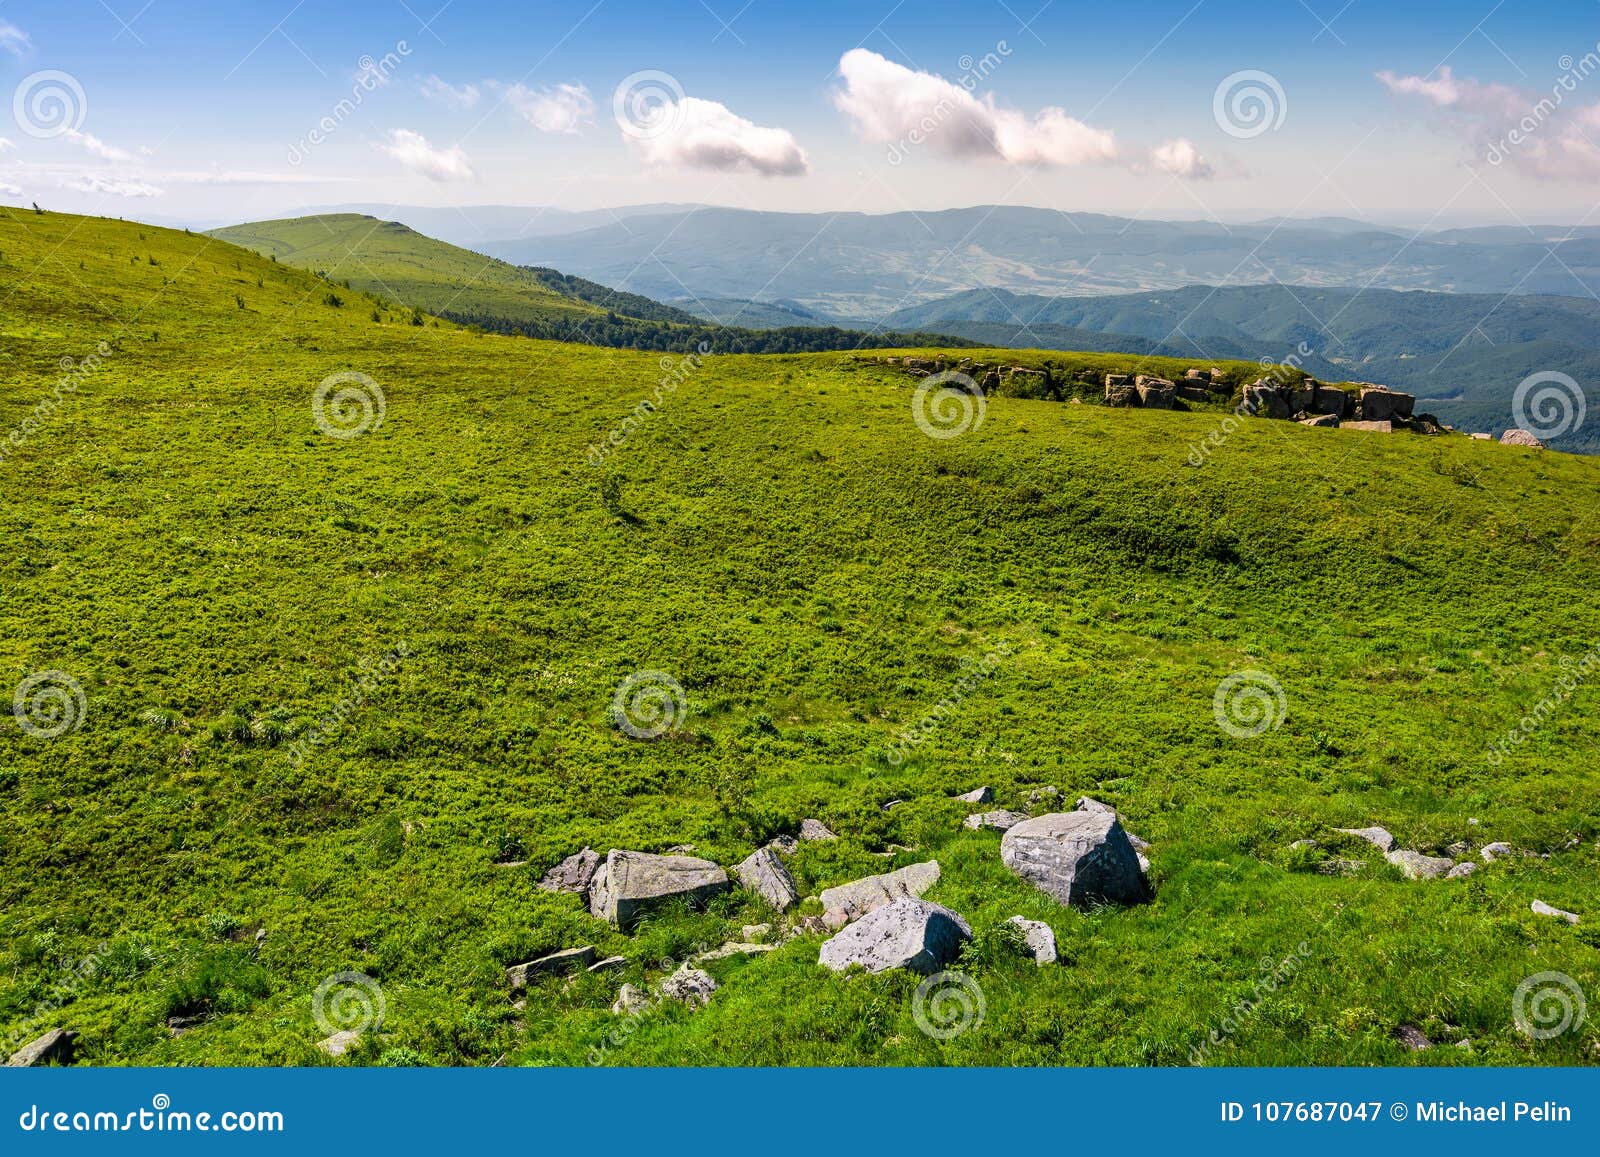 grassy alpine meadow of polonina runa